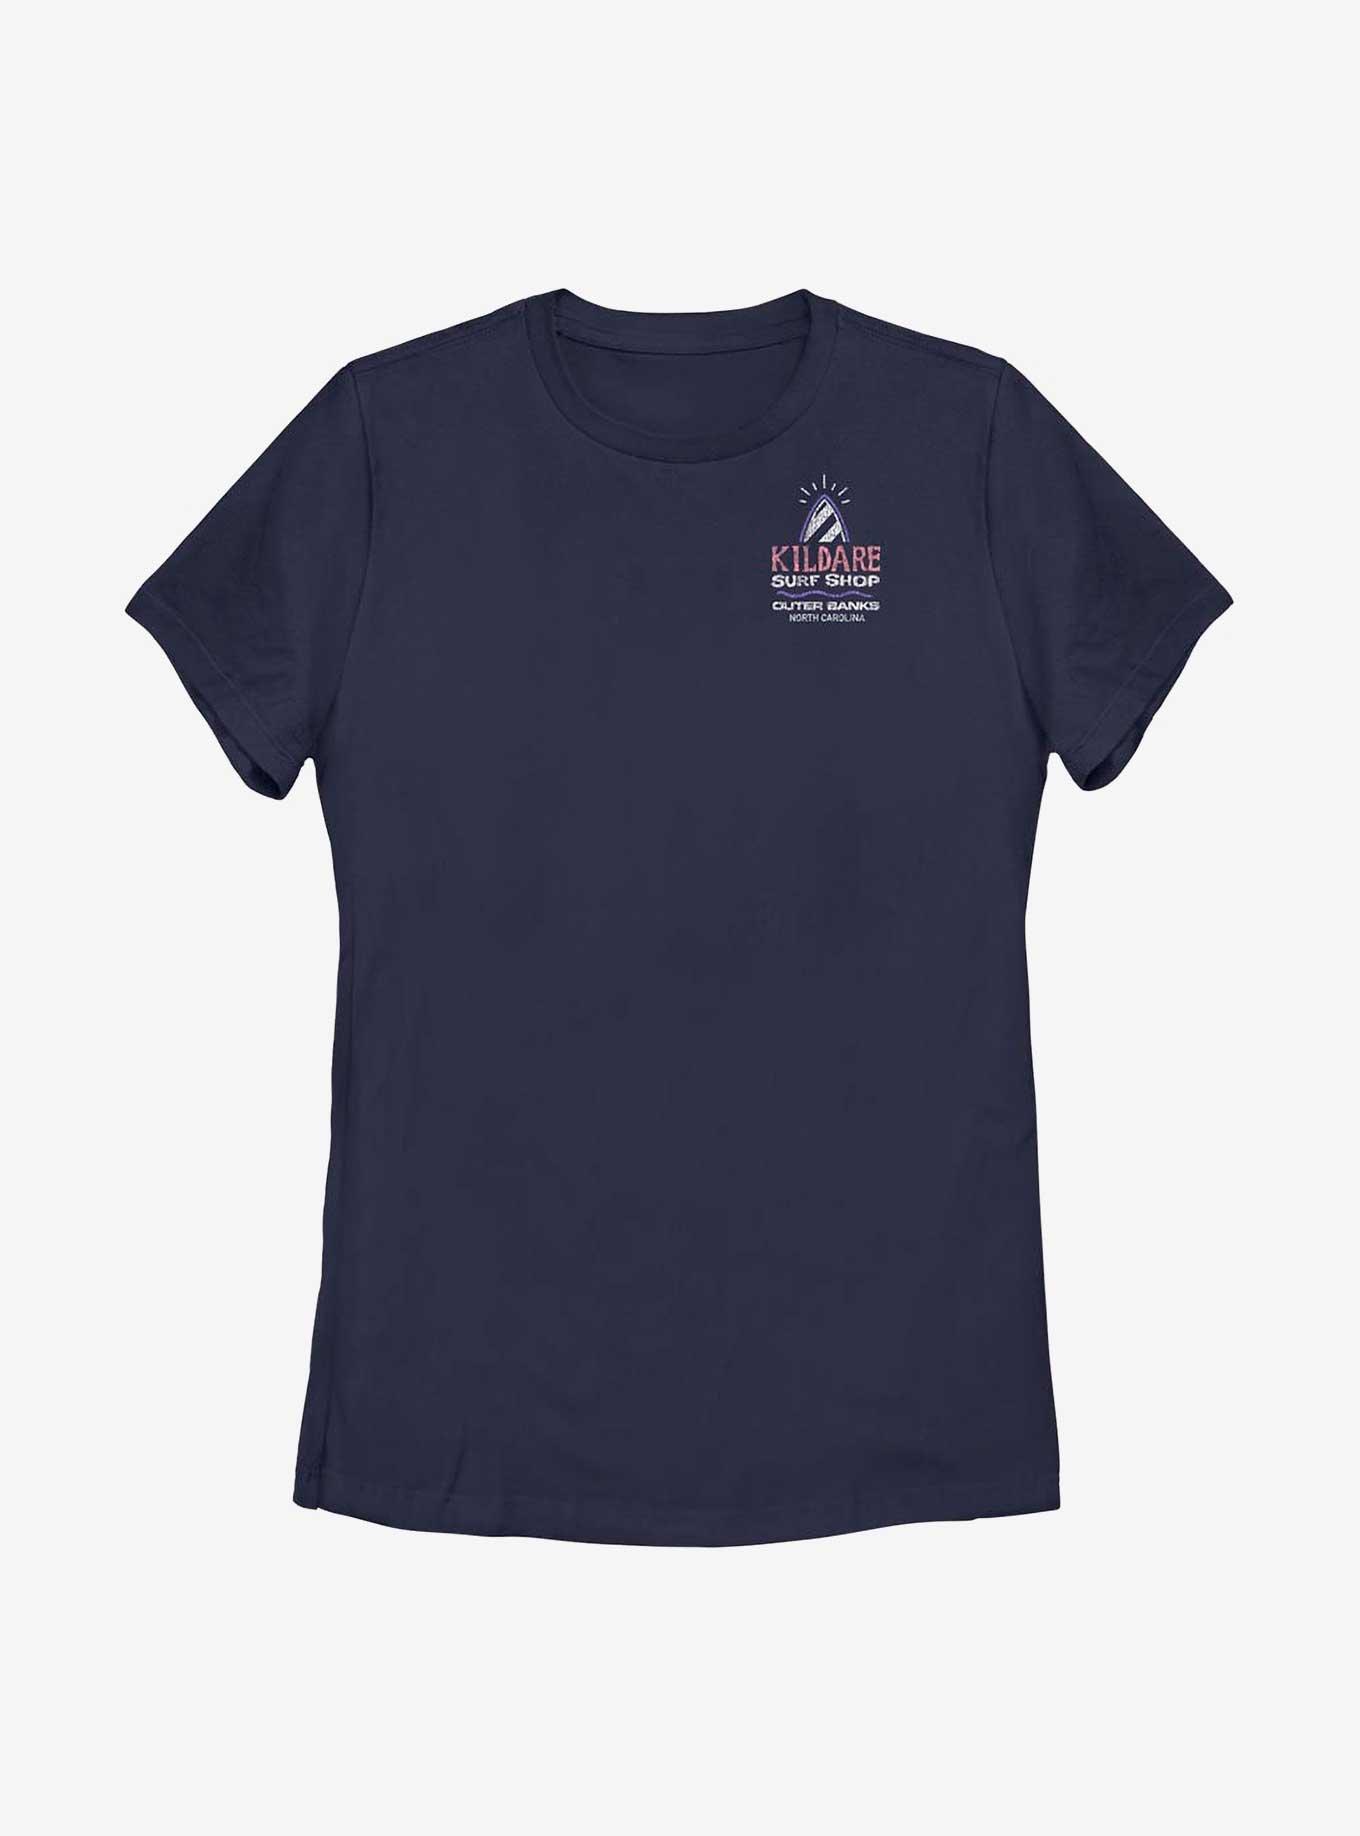 Outer Banks Kildare Surf Shop Womens T-Shirt, NAVY, hi-res